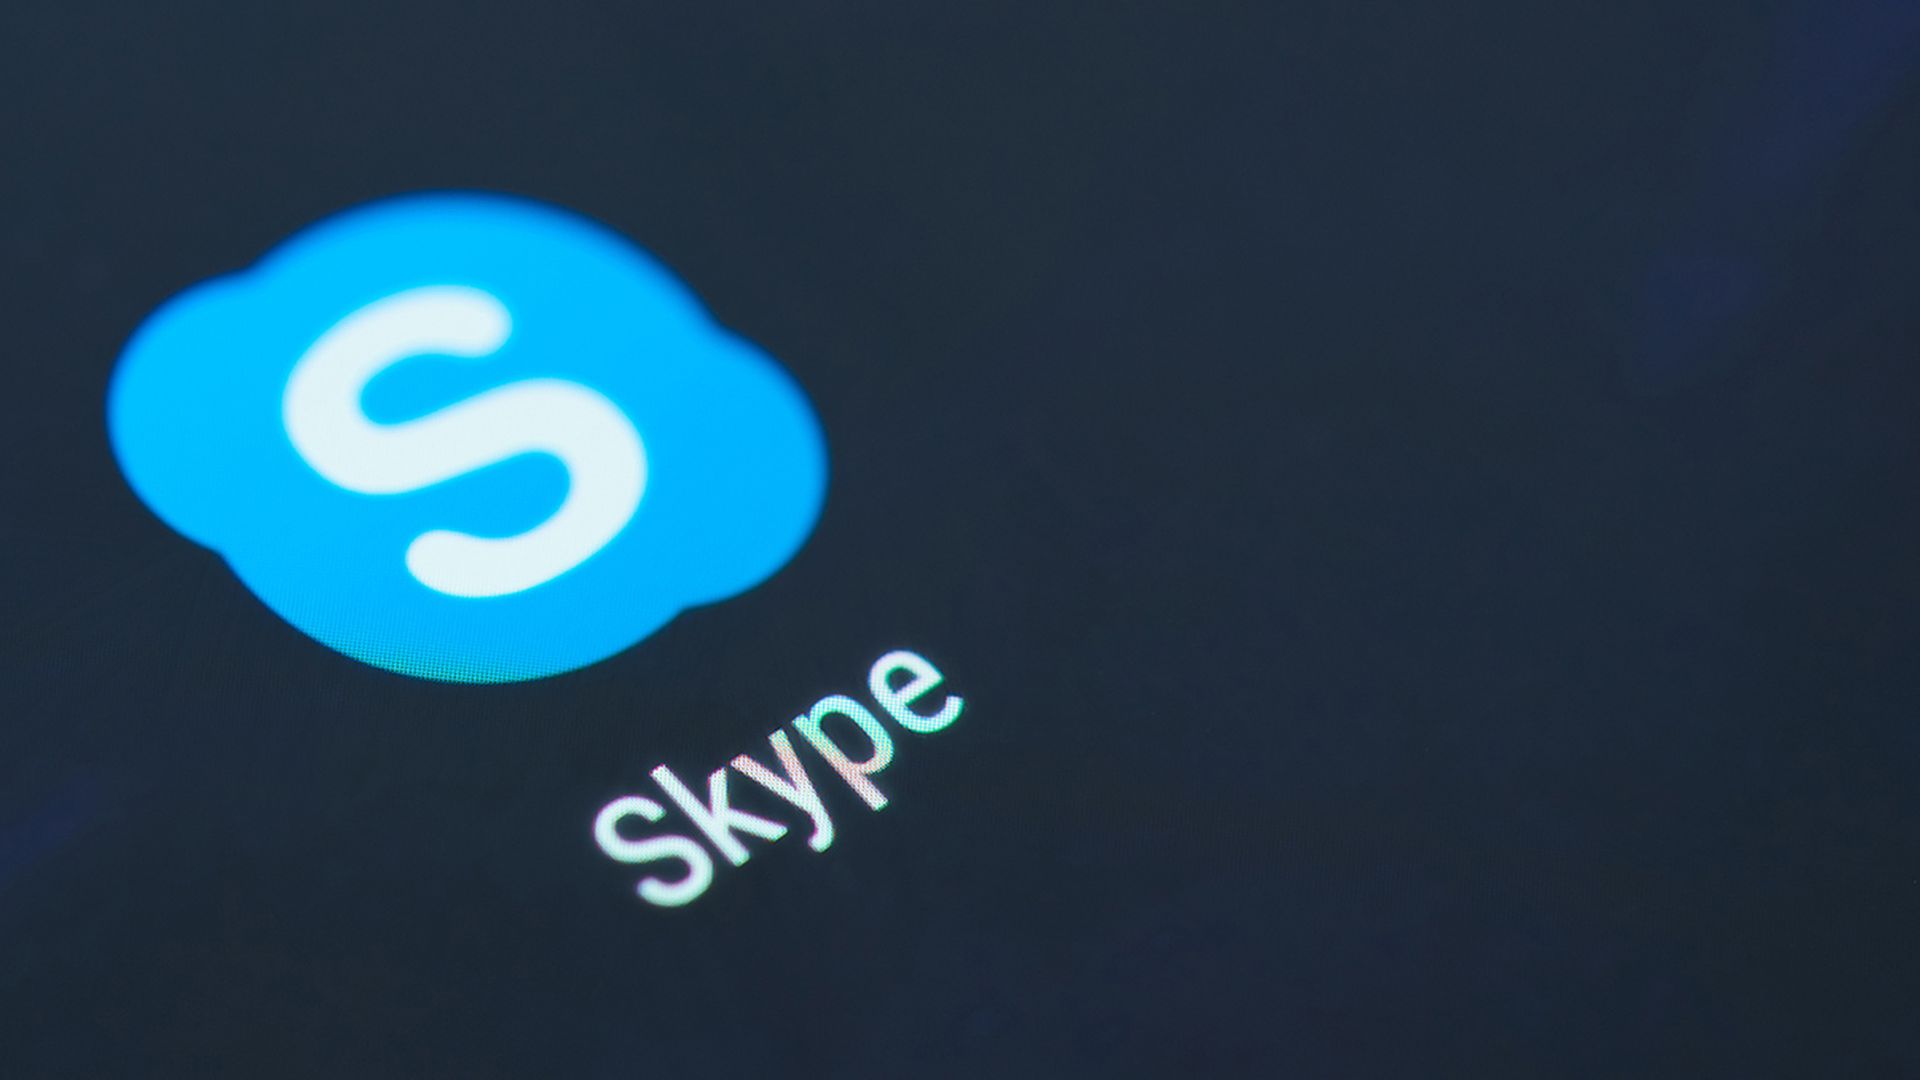 Skype application icon on smartphone screen.